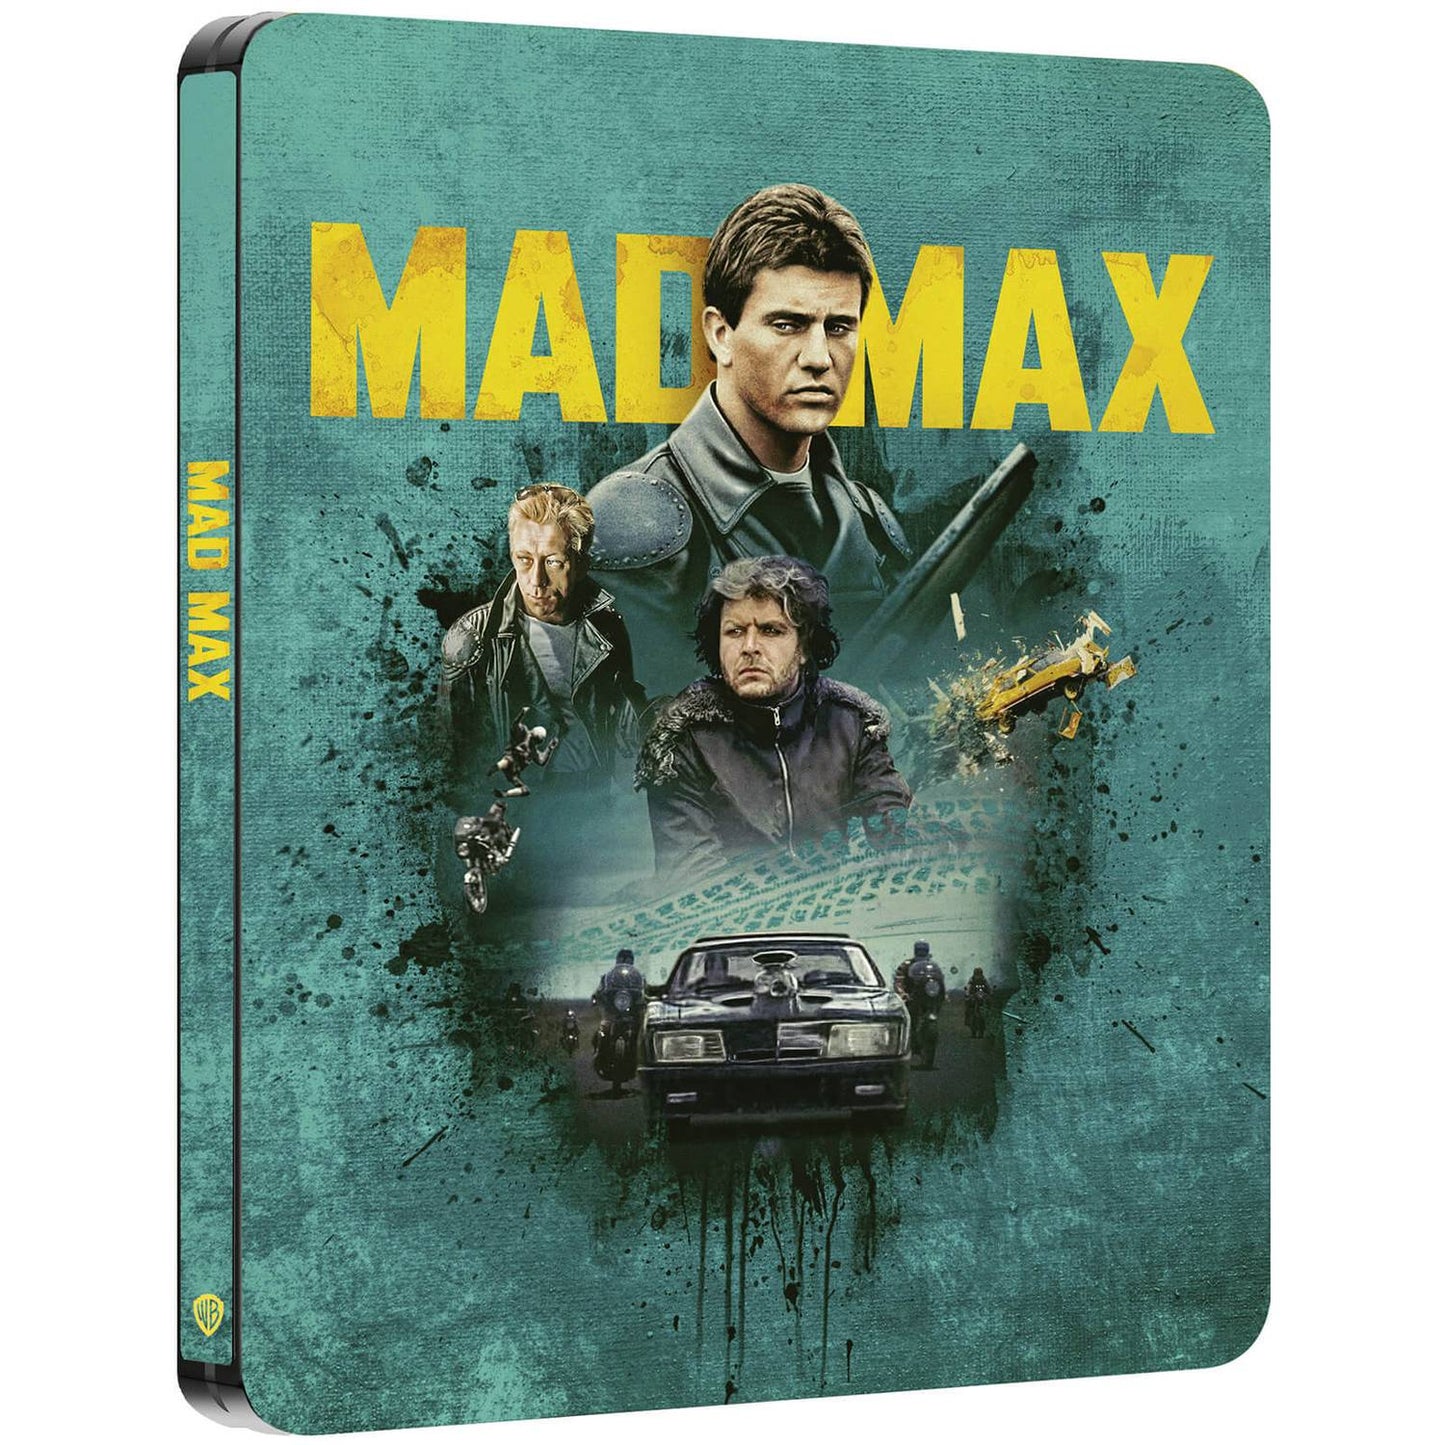 Безумный Макс (1979) (4K UHD + Blu-ray) Steelbook